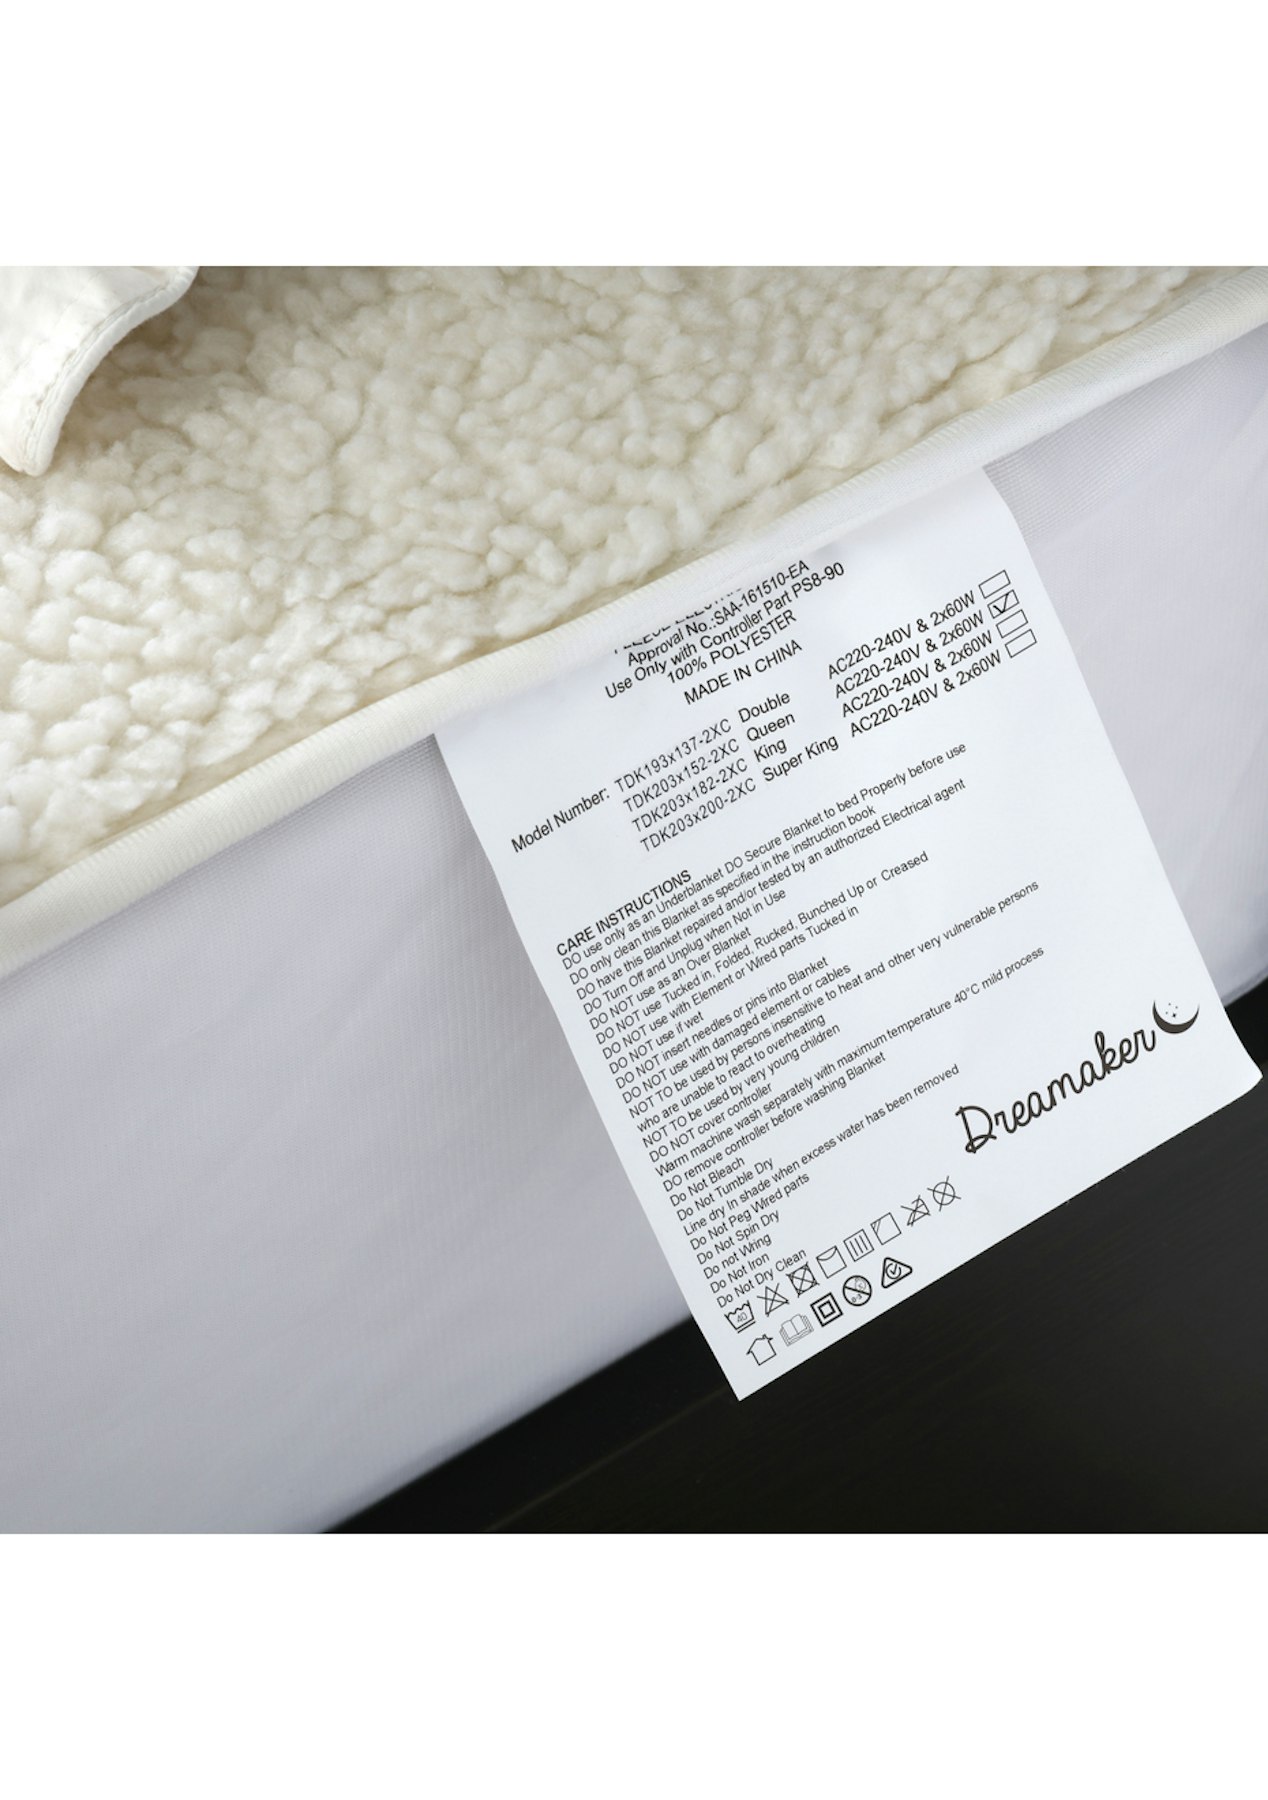 Dreamaker 350 Gsm Fleece Top Electric Blanket King Single Bed